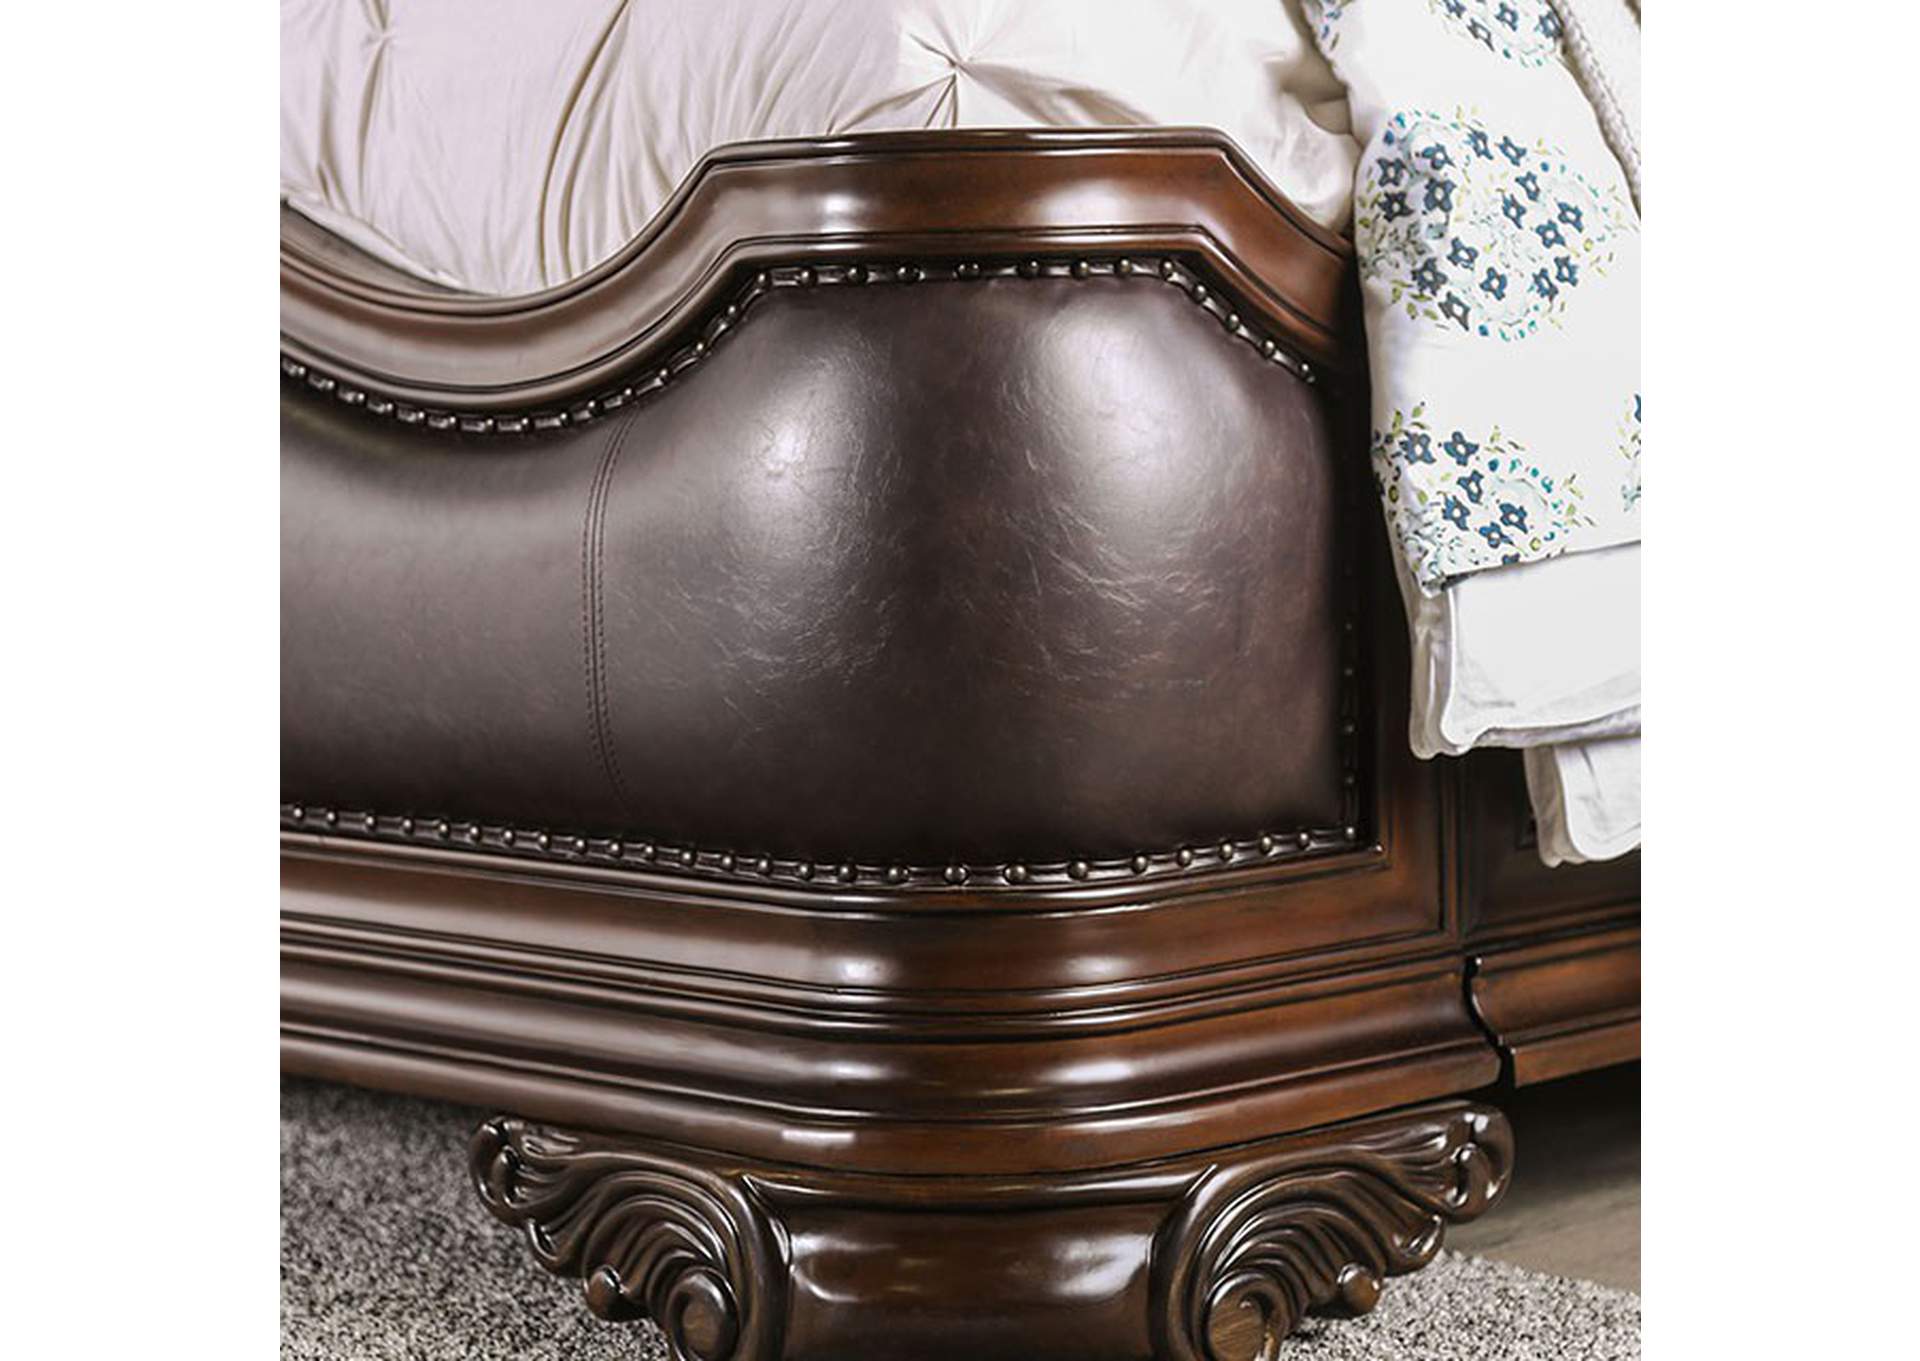 Arcturus Queen Bed,Furniture of America